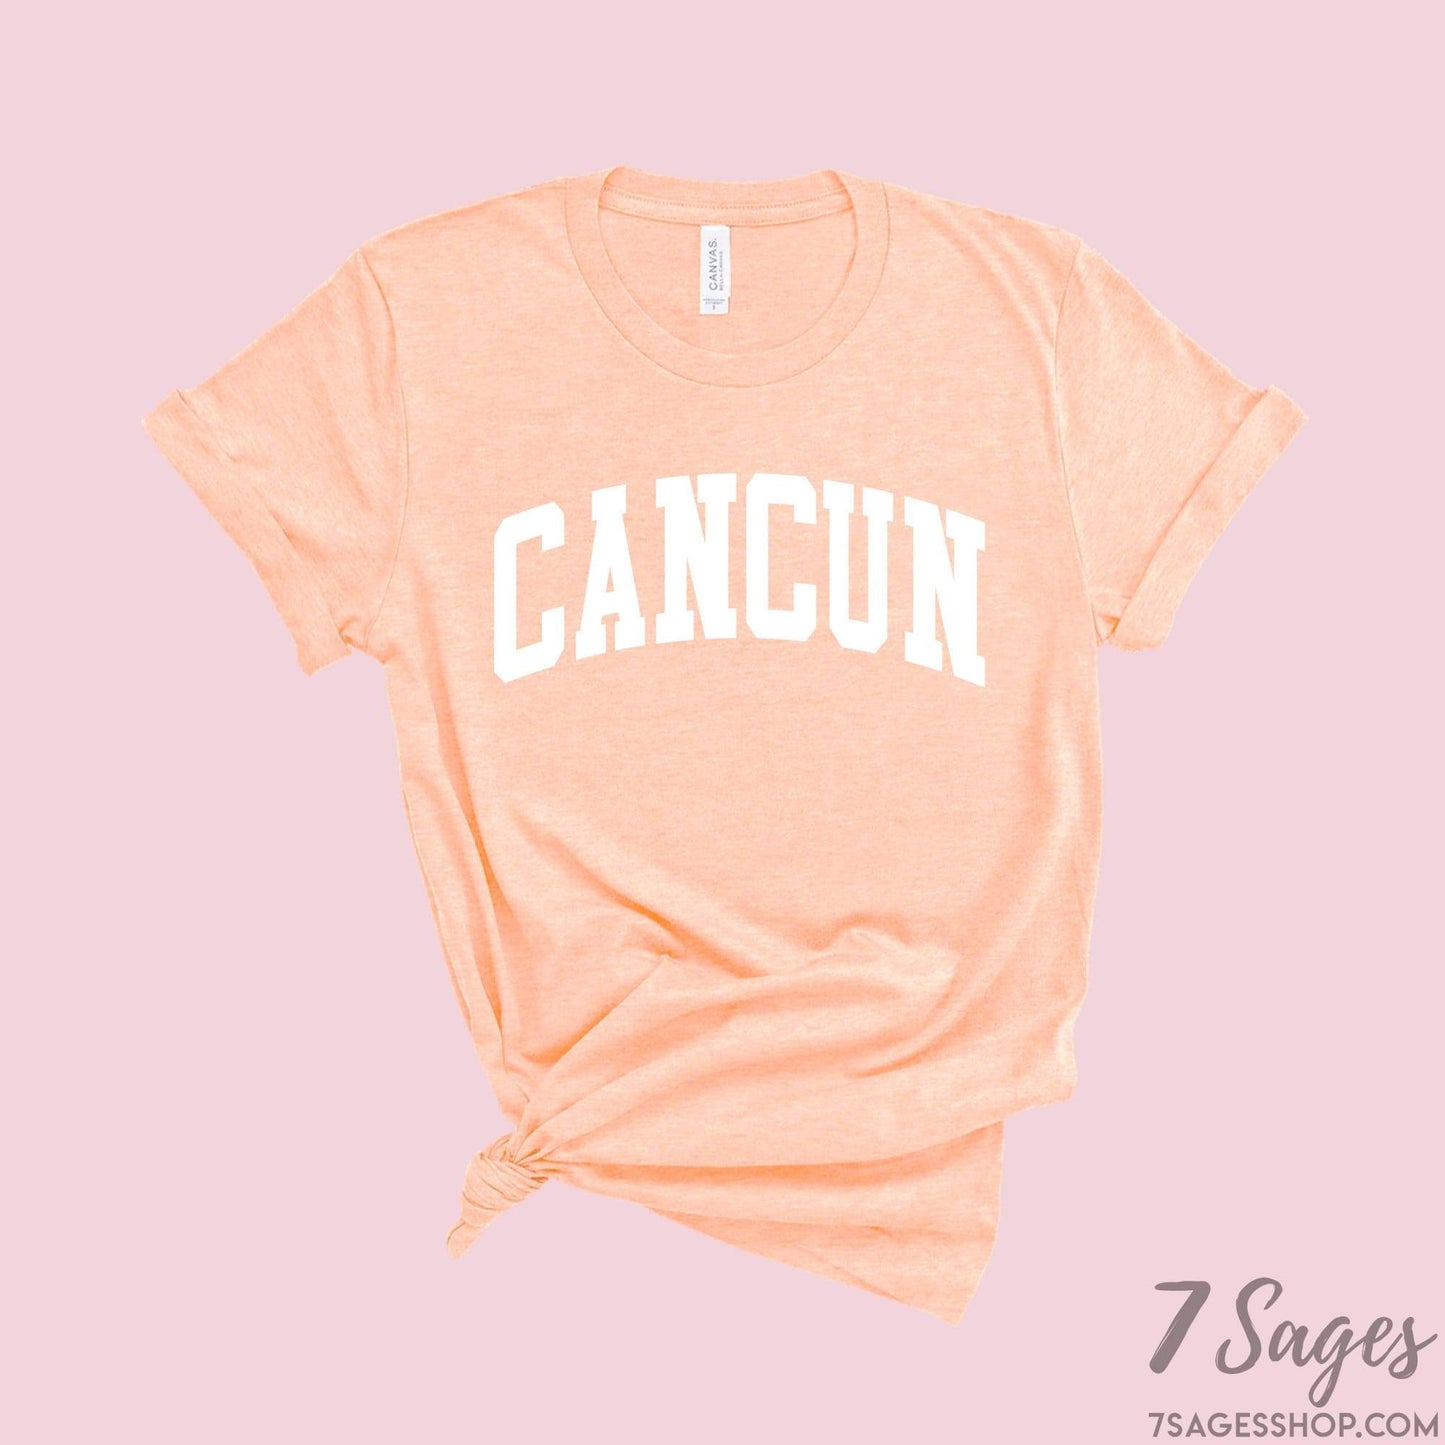 Cancun Shirt Mexico Shirt Spring Break Tshirt Cancun Mexico Shirts Mexico Trip Mexico Vacation Cancun Trip